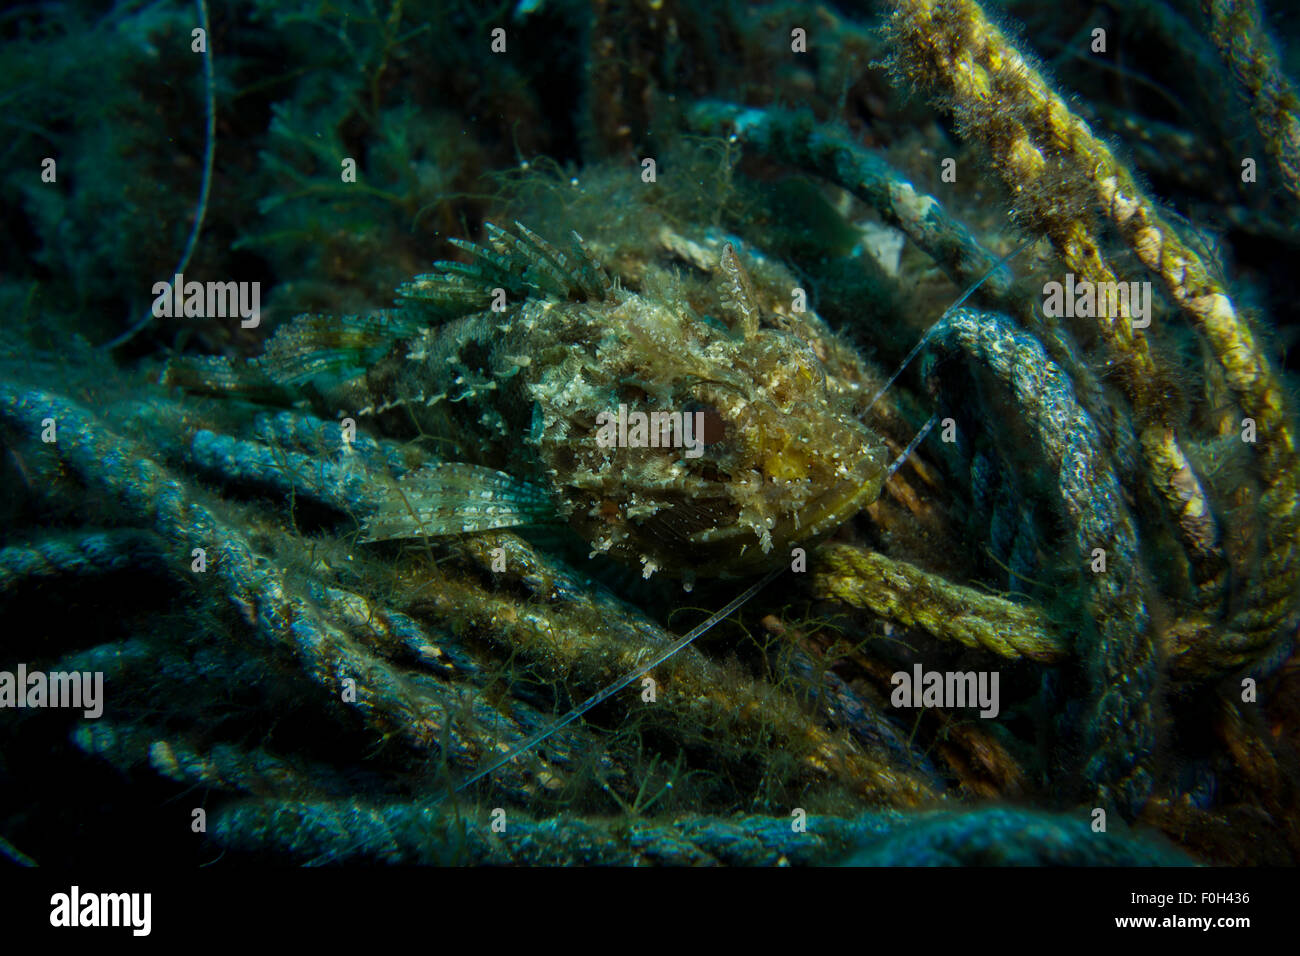 Dwarf Rockfish, Scorpaena notate, on algae covered fishing line in the Mediterranean Sea, Malta. Stock Photo